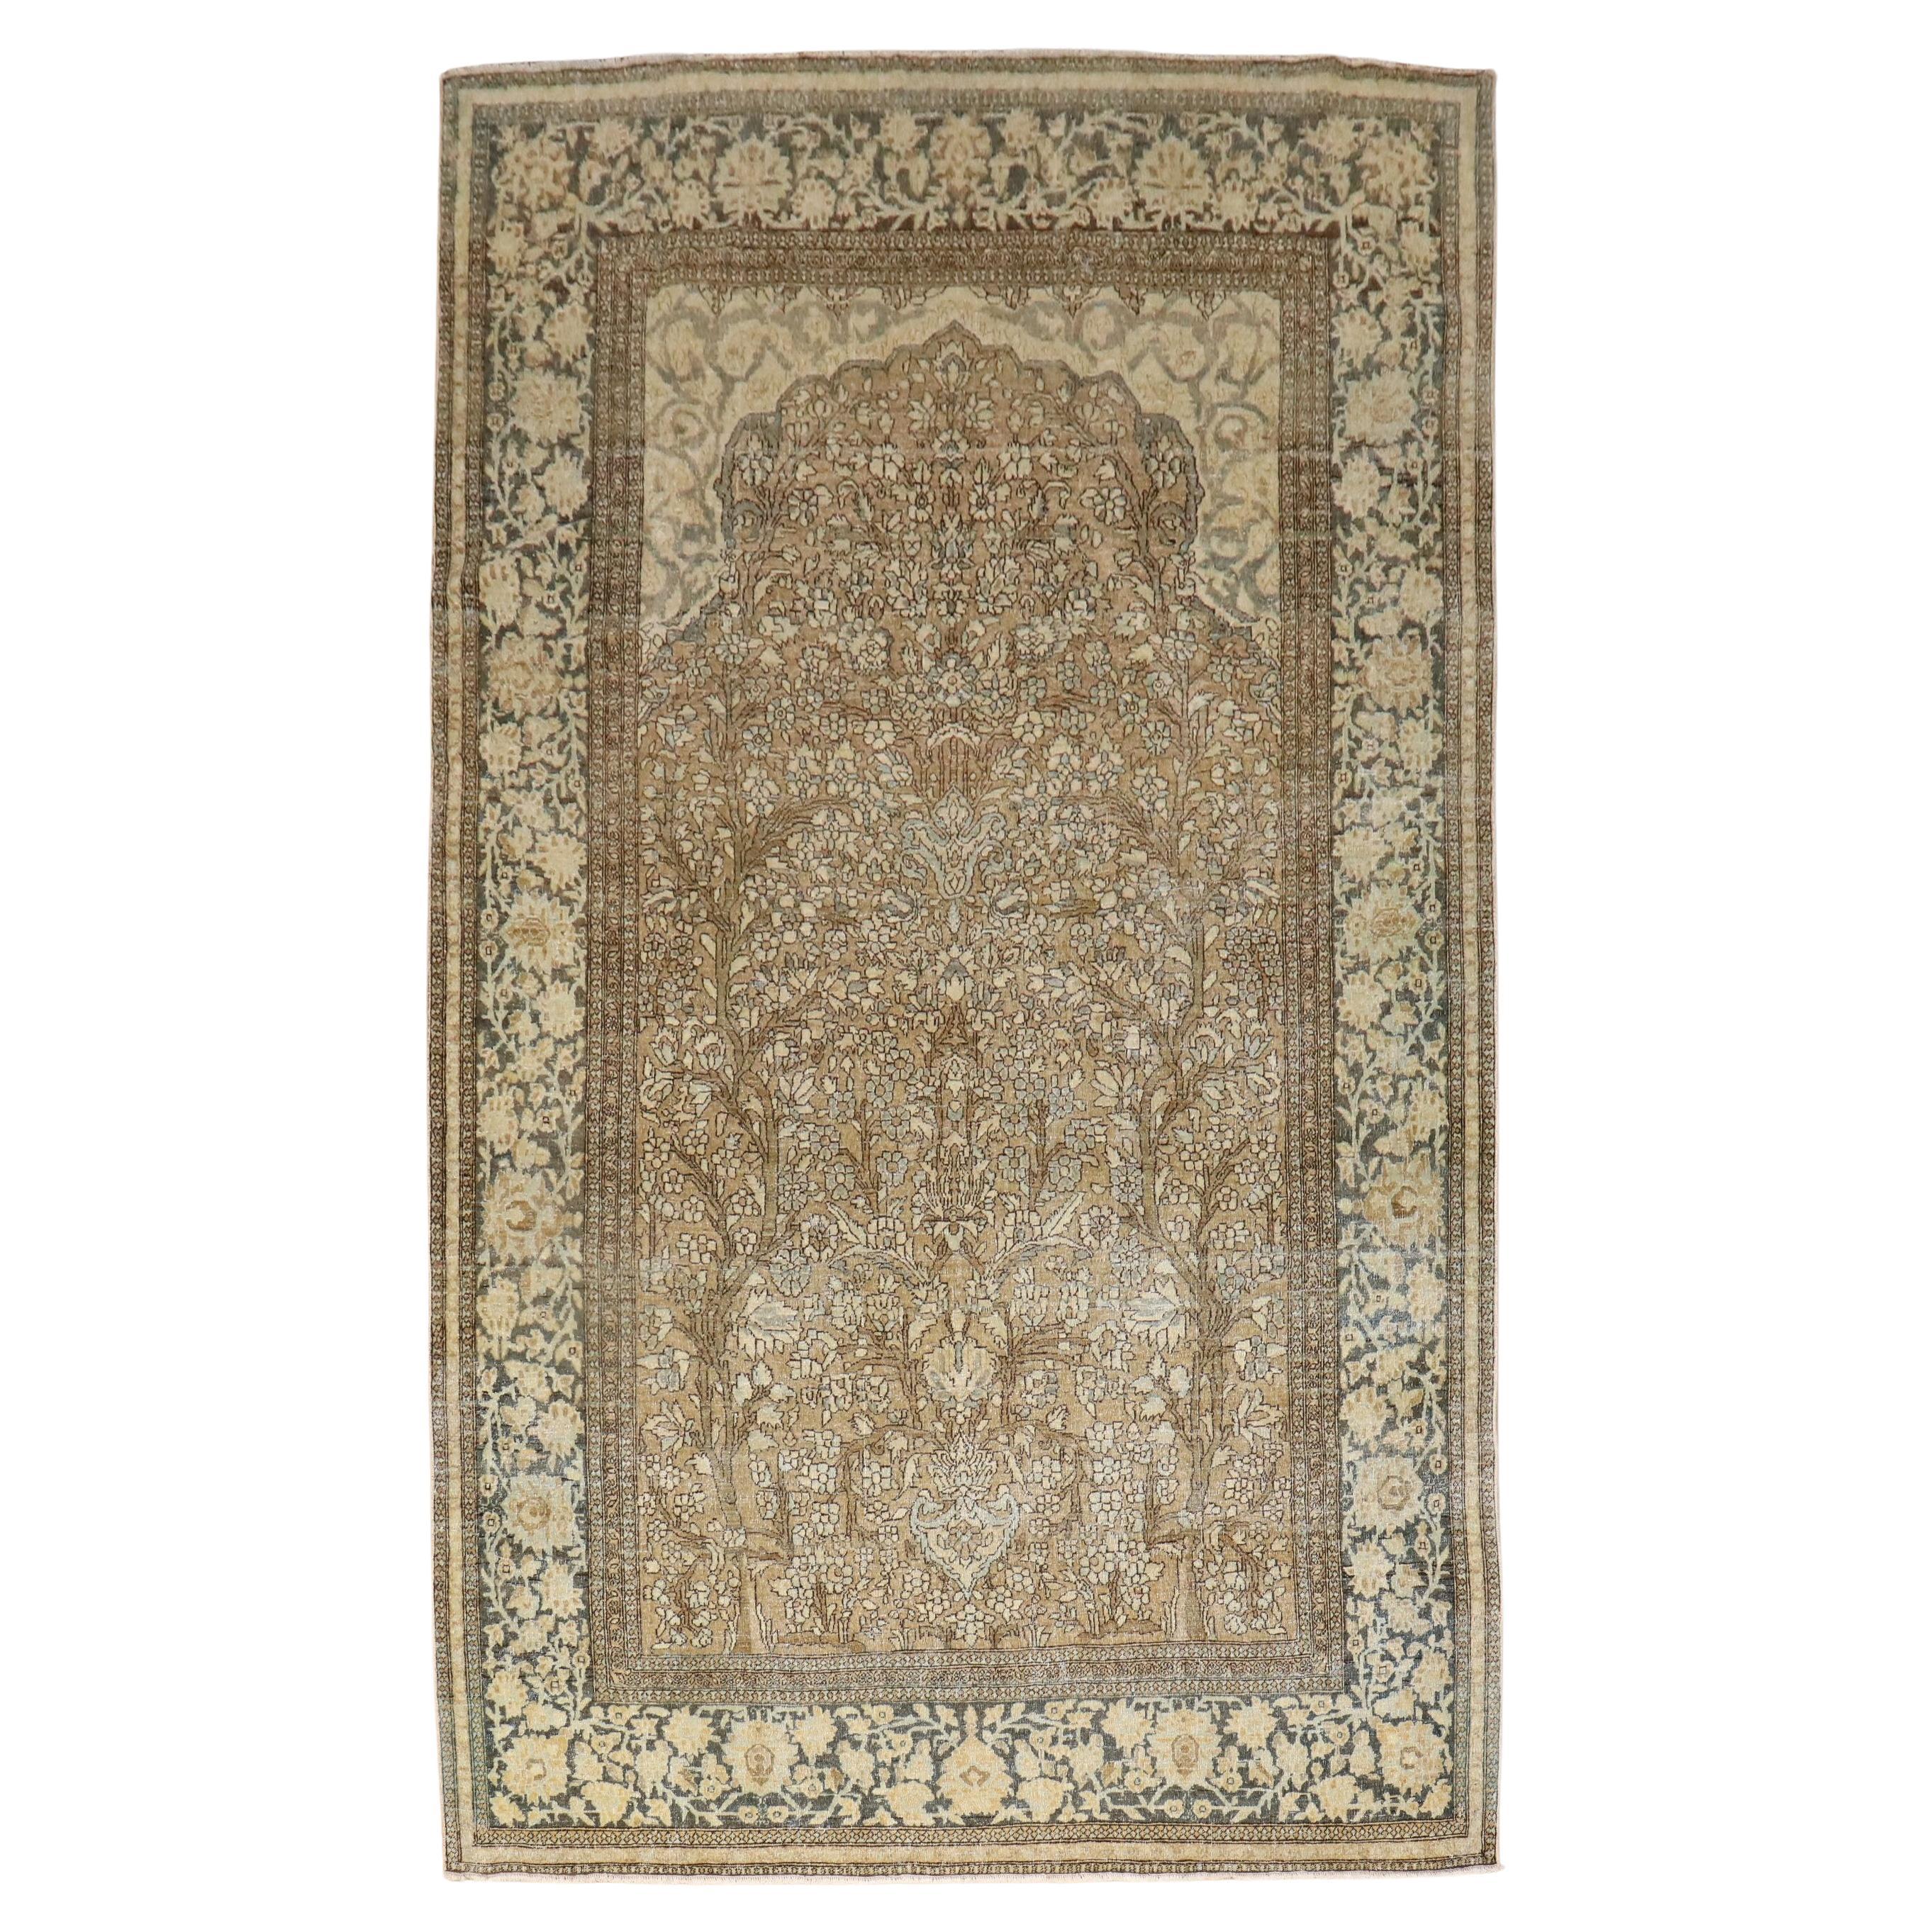 Antique Persian Isfahan Mihrab Prayer Carpet